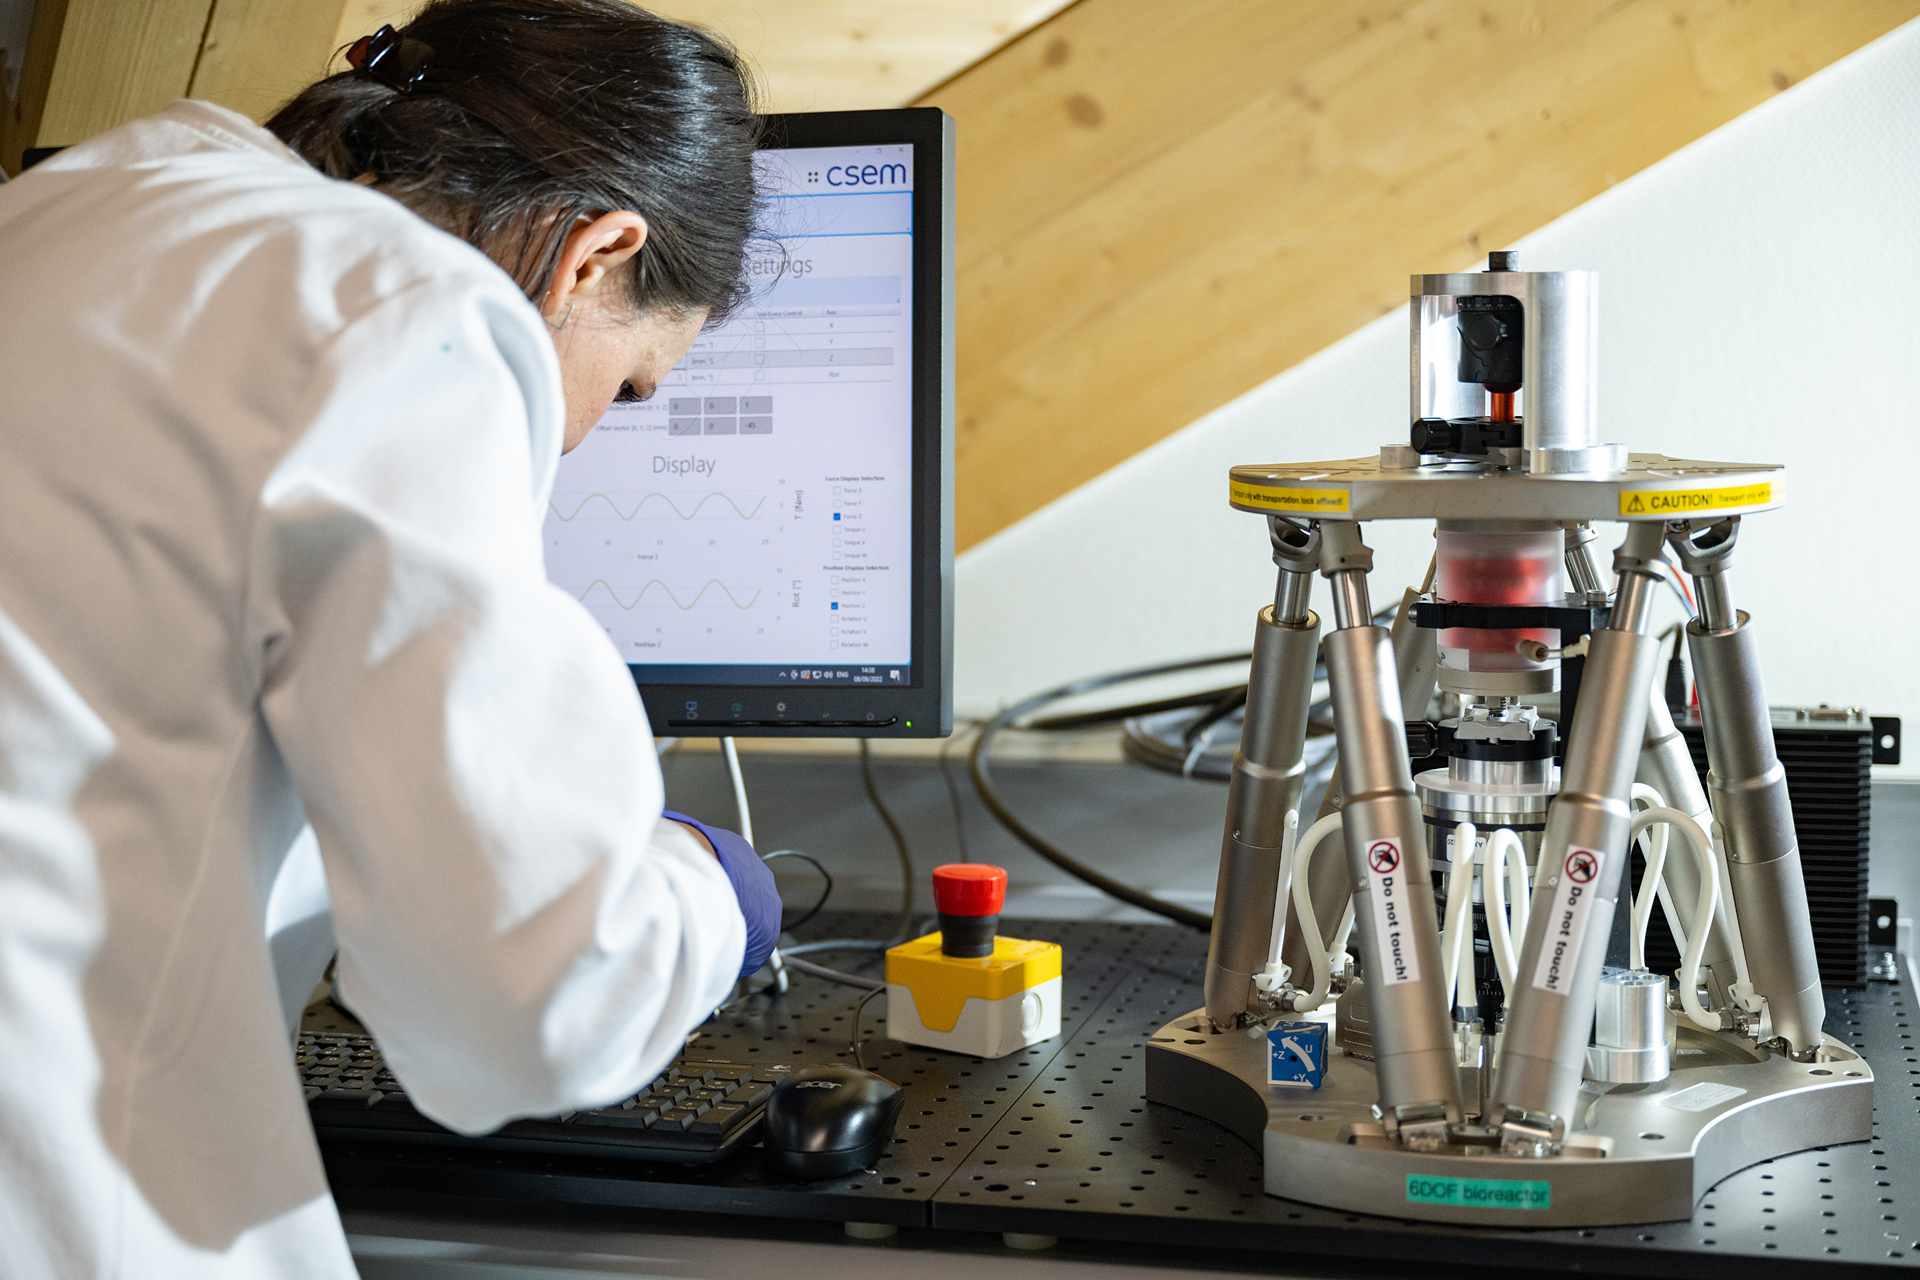 A lab technician operates the benchtop multiaxial bioreactor system.